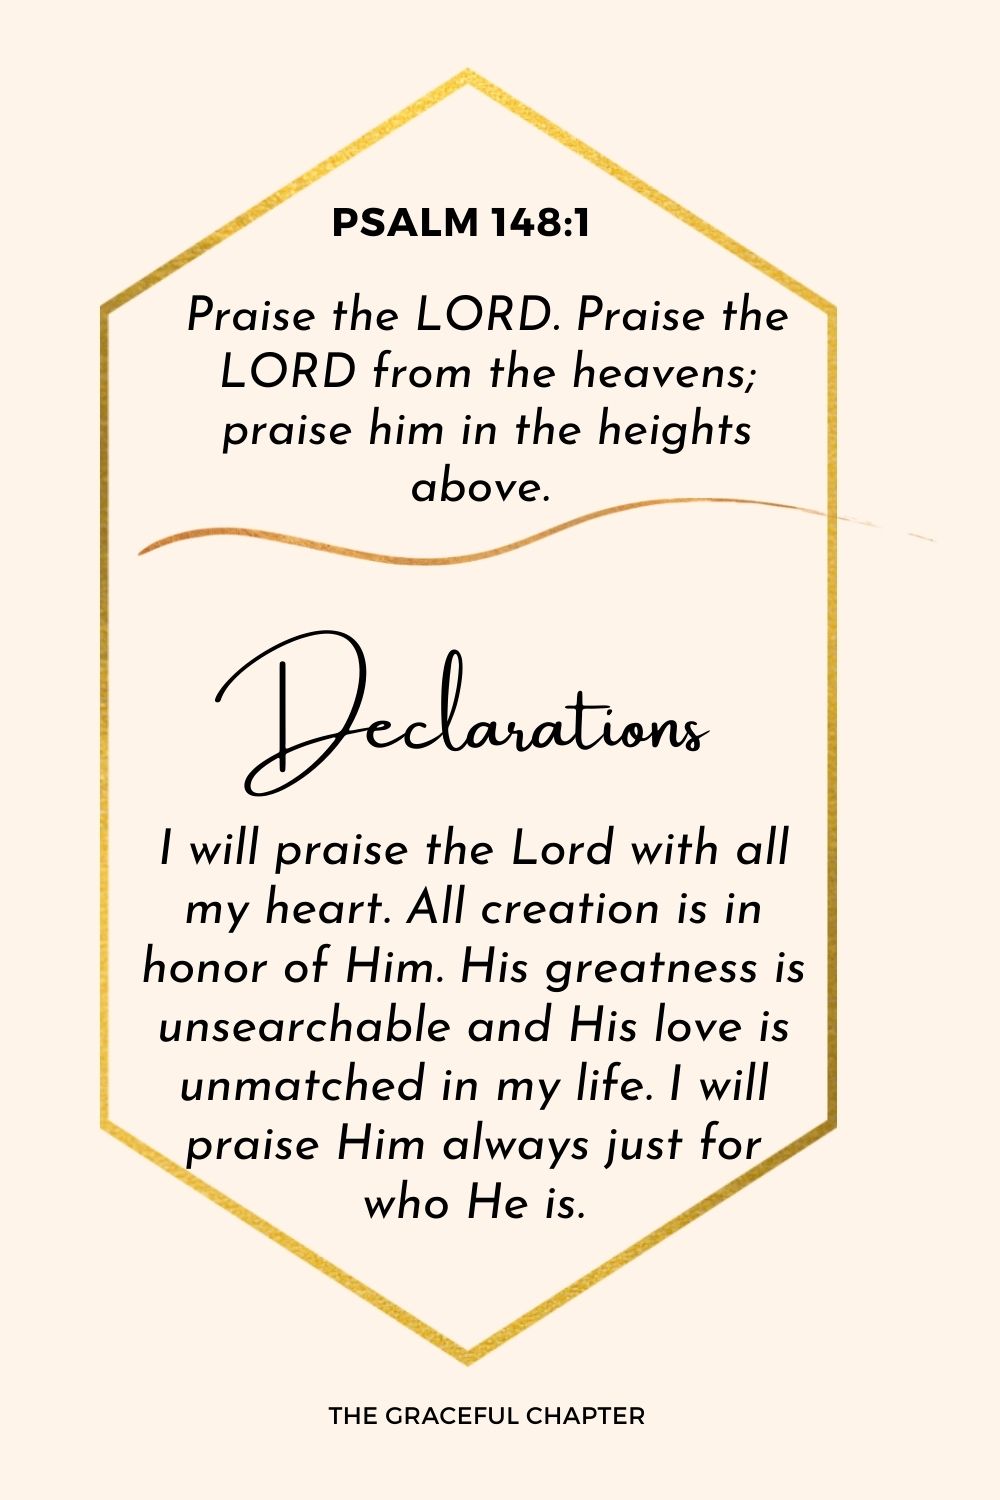 Psalm 148:1 declaration